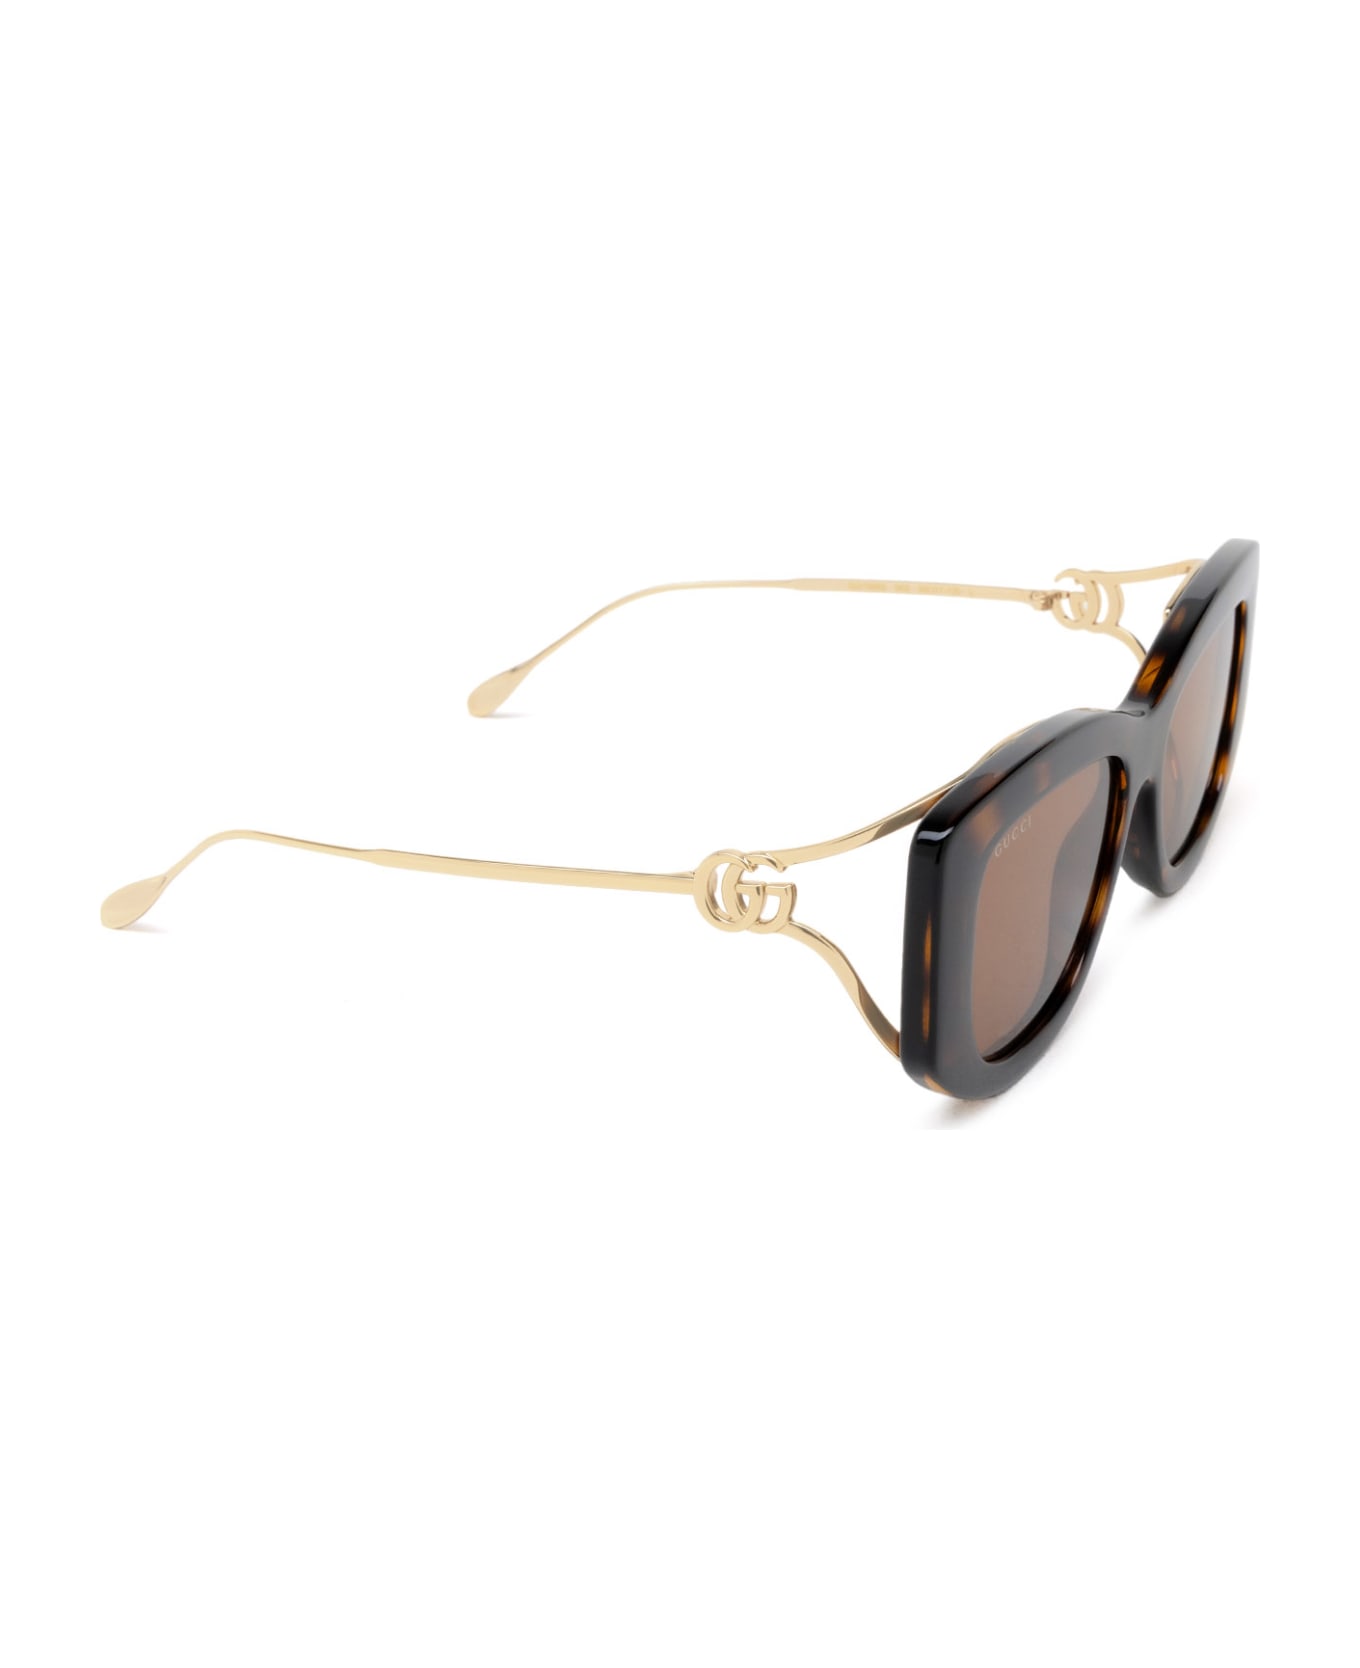 Gucci Eyewear Gg1566s Havana Sunglasses - Havana サングラス